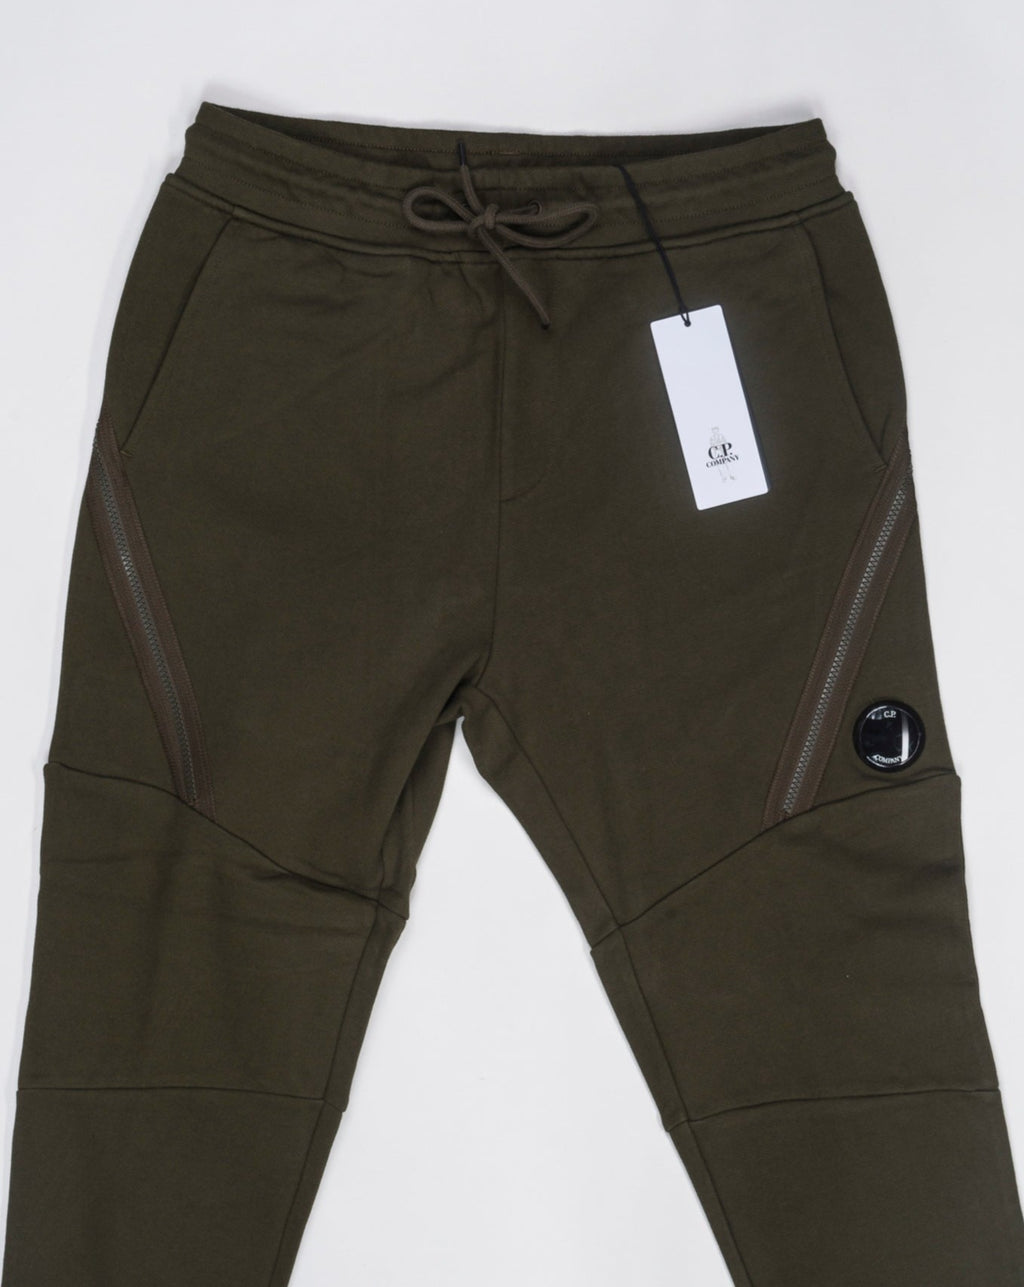 Shop Preme Semi Stacked Cargo Fleece Pants PRKB100-OLV green